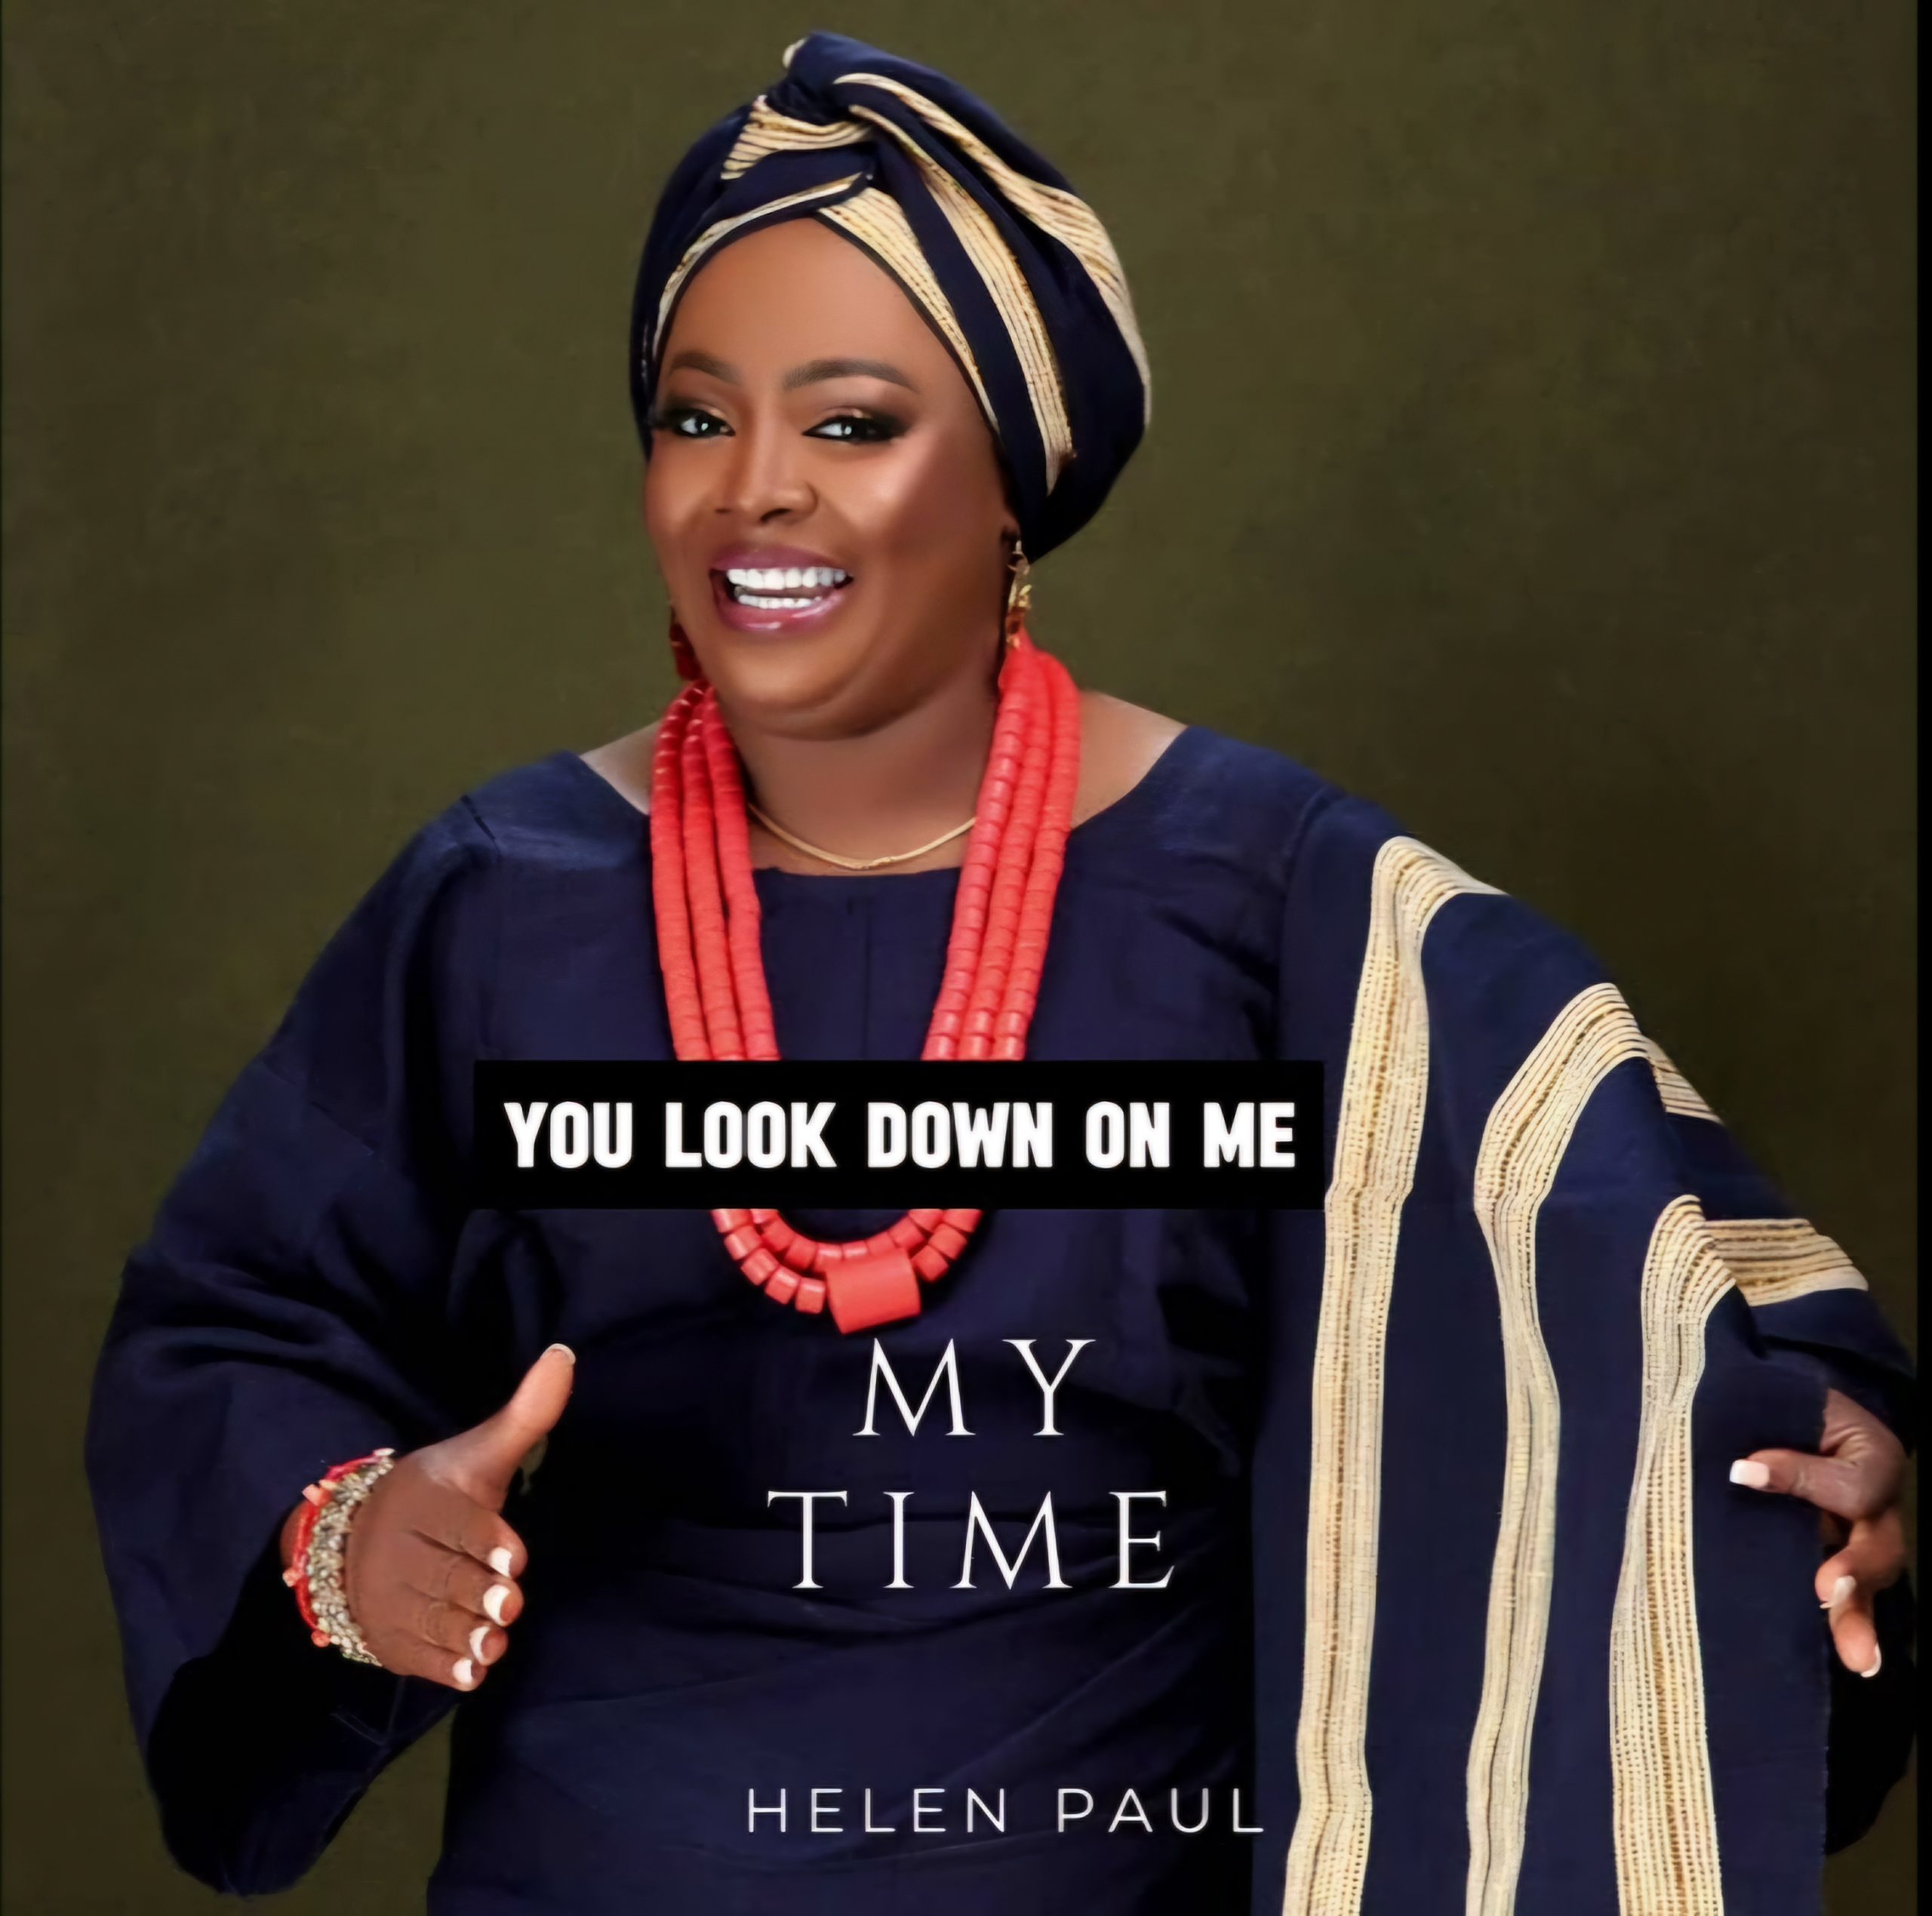 My Time by Helen Paul [Video]